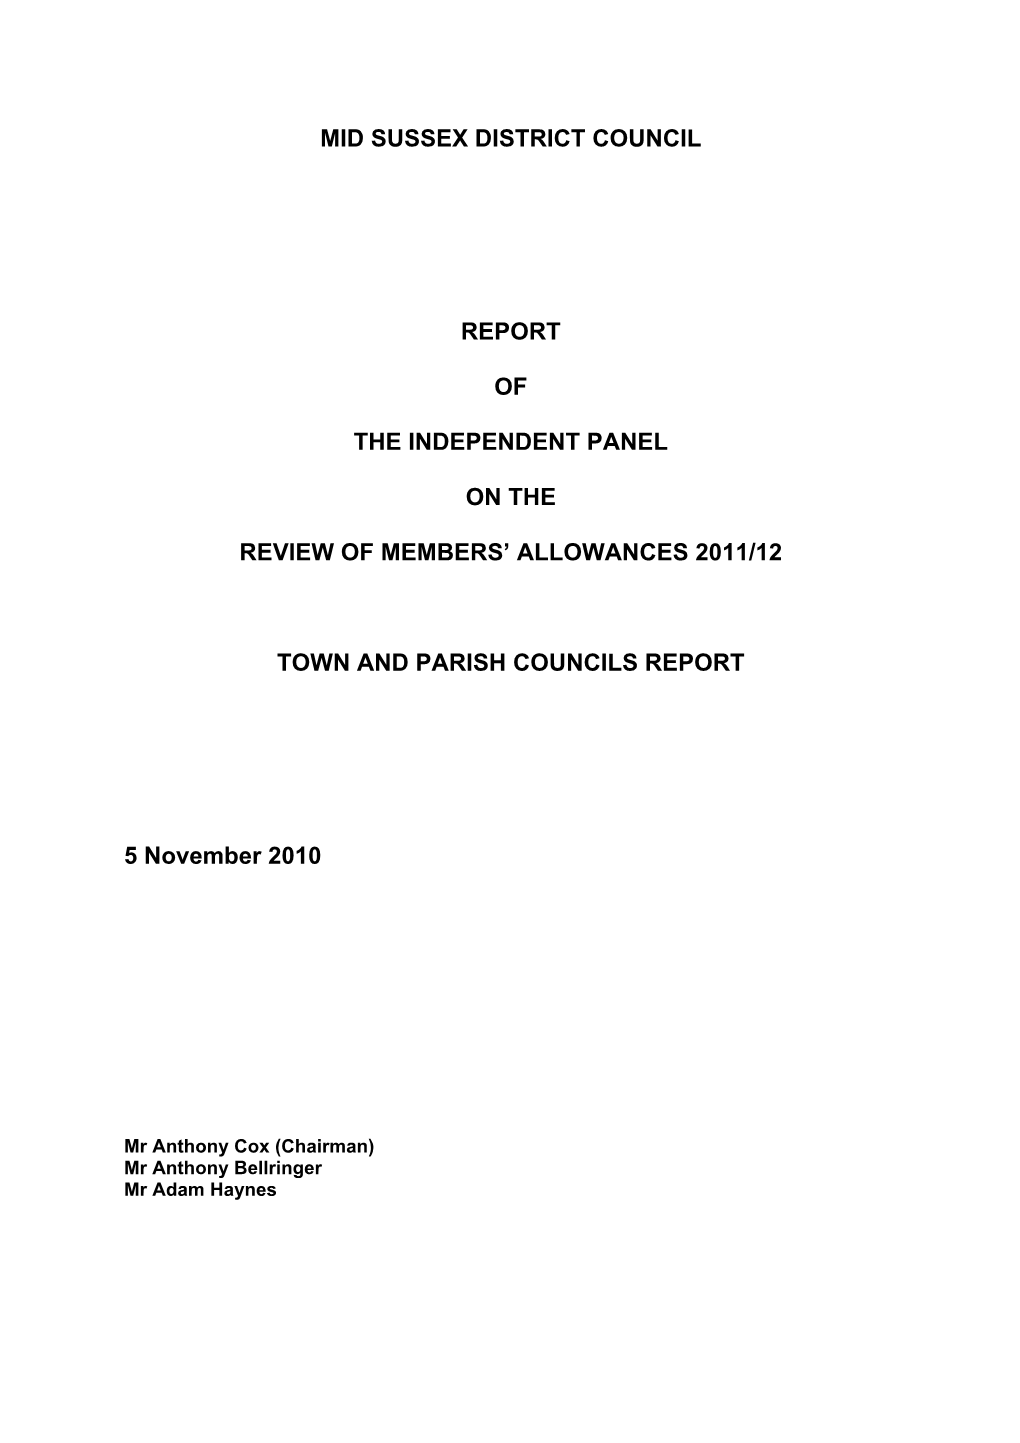 Town and Parish Council Allowances Report 2011/12